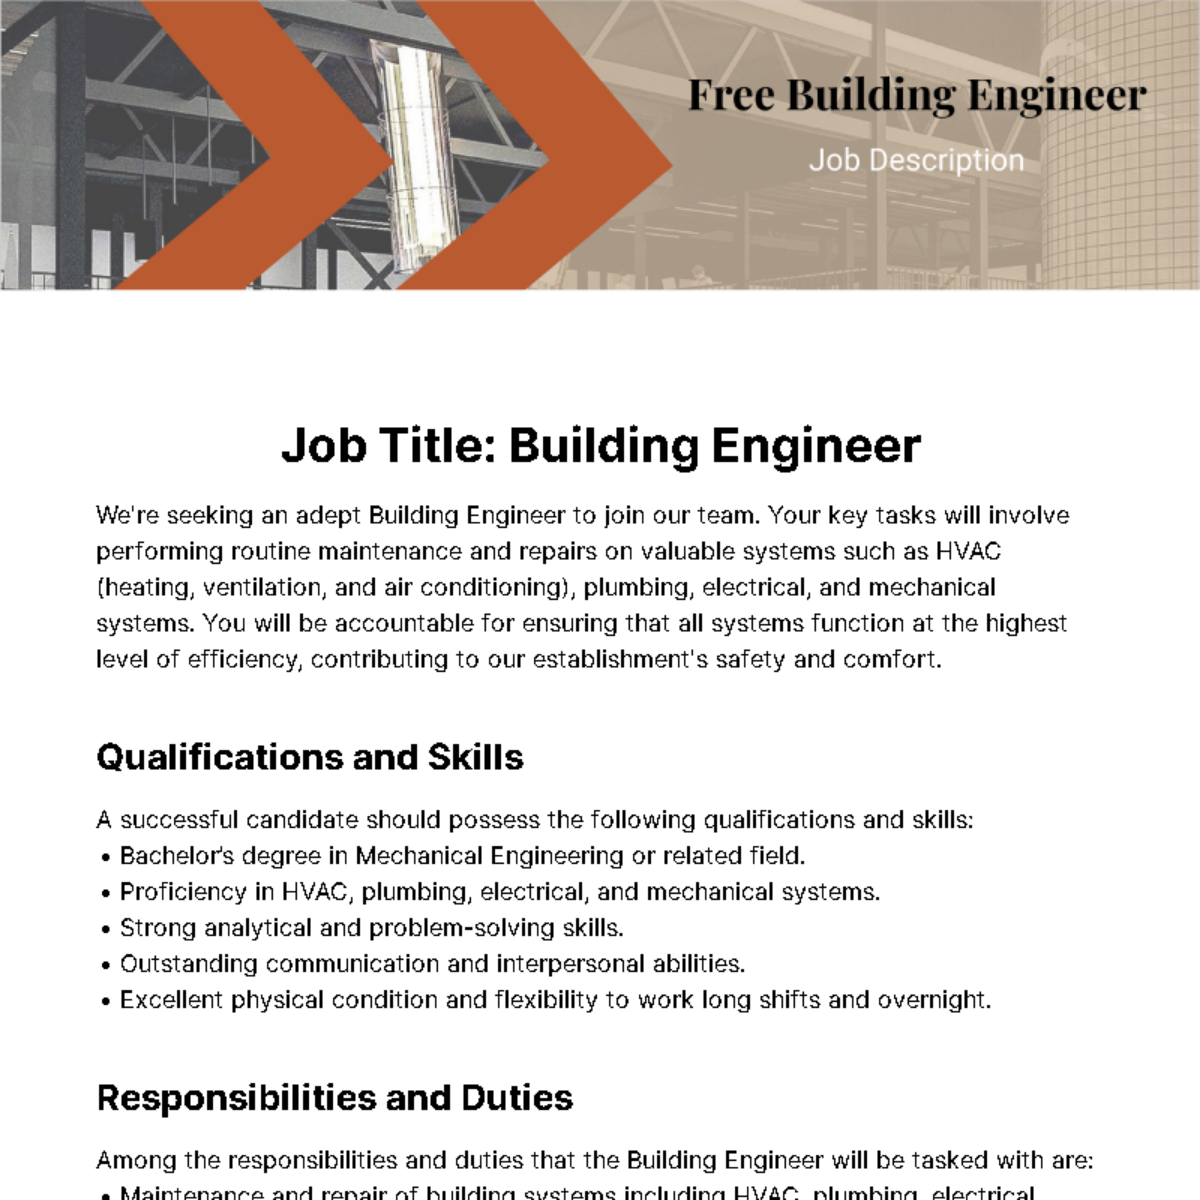 Free Building Engineer Job Description Template